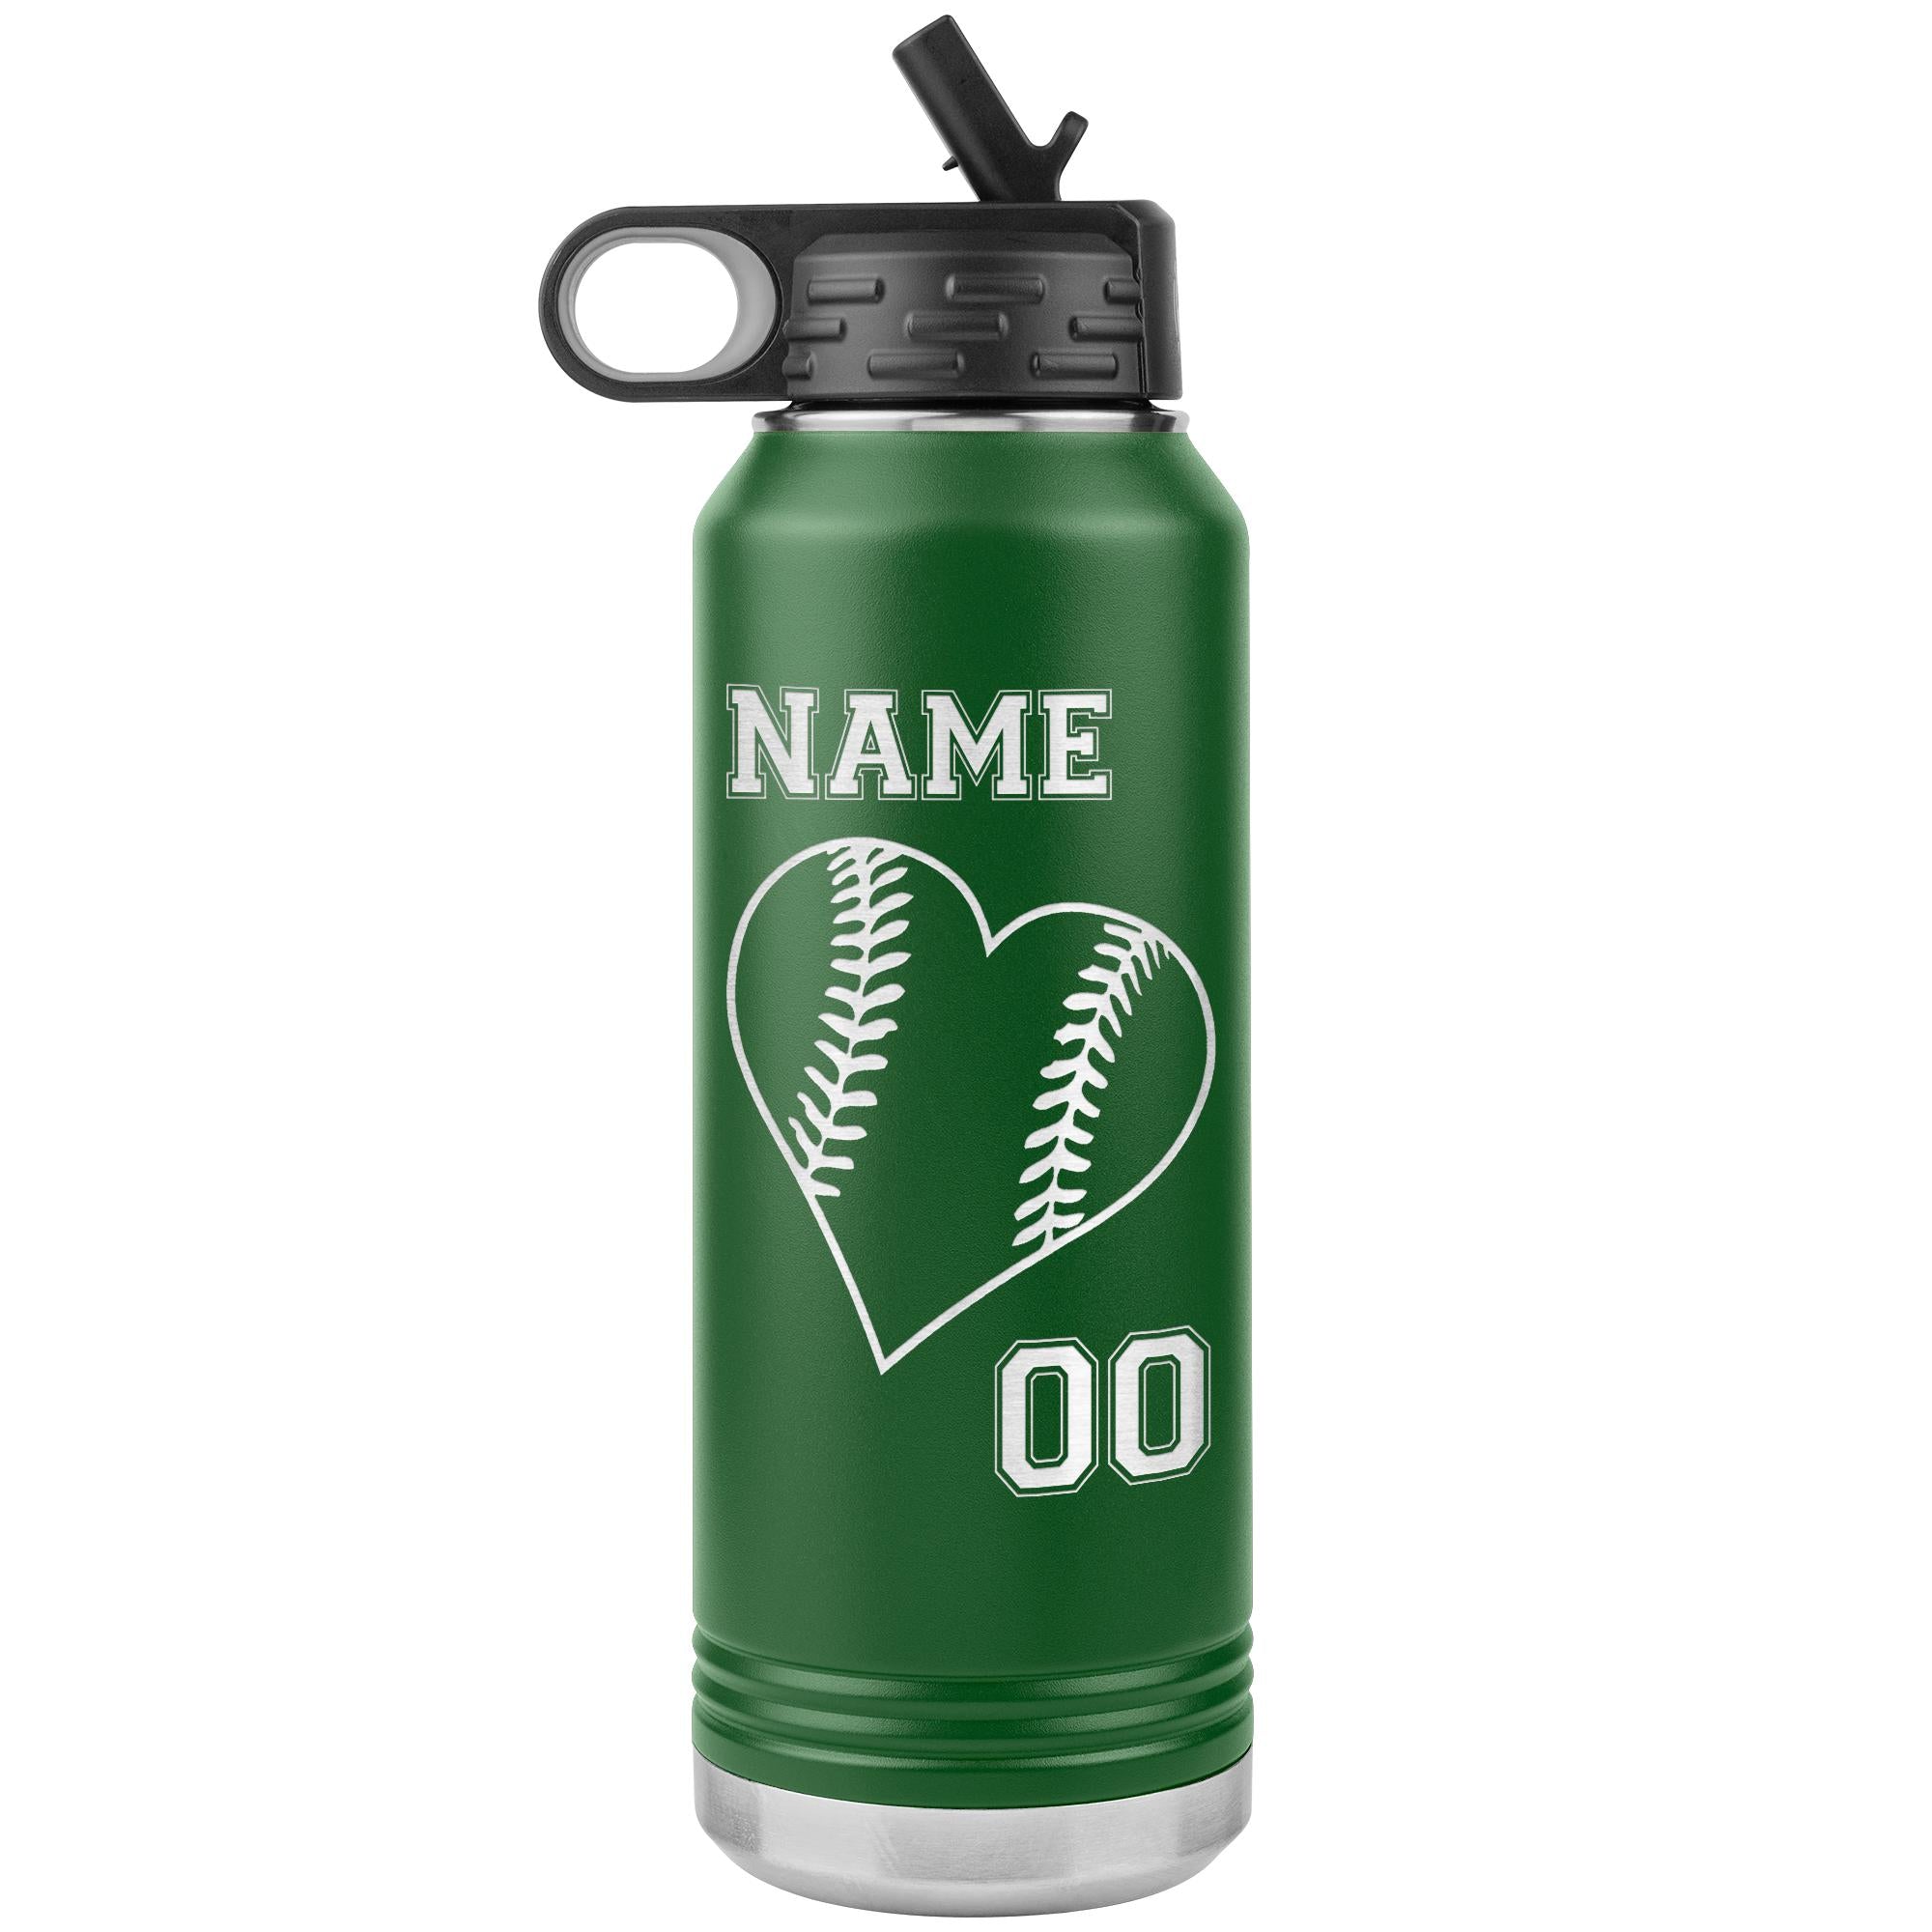 Boston Celtics Stainless Steel Water Bottle